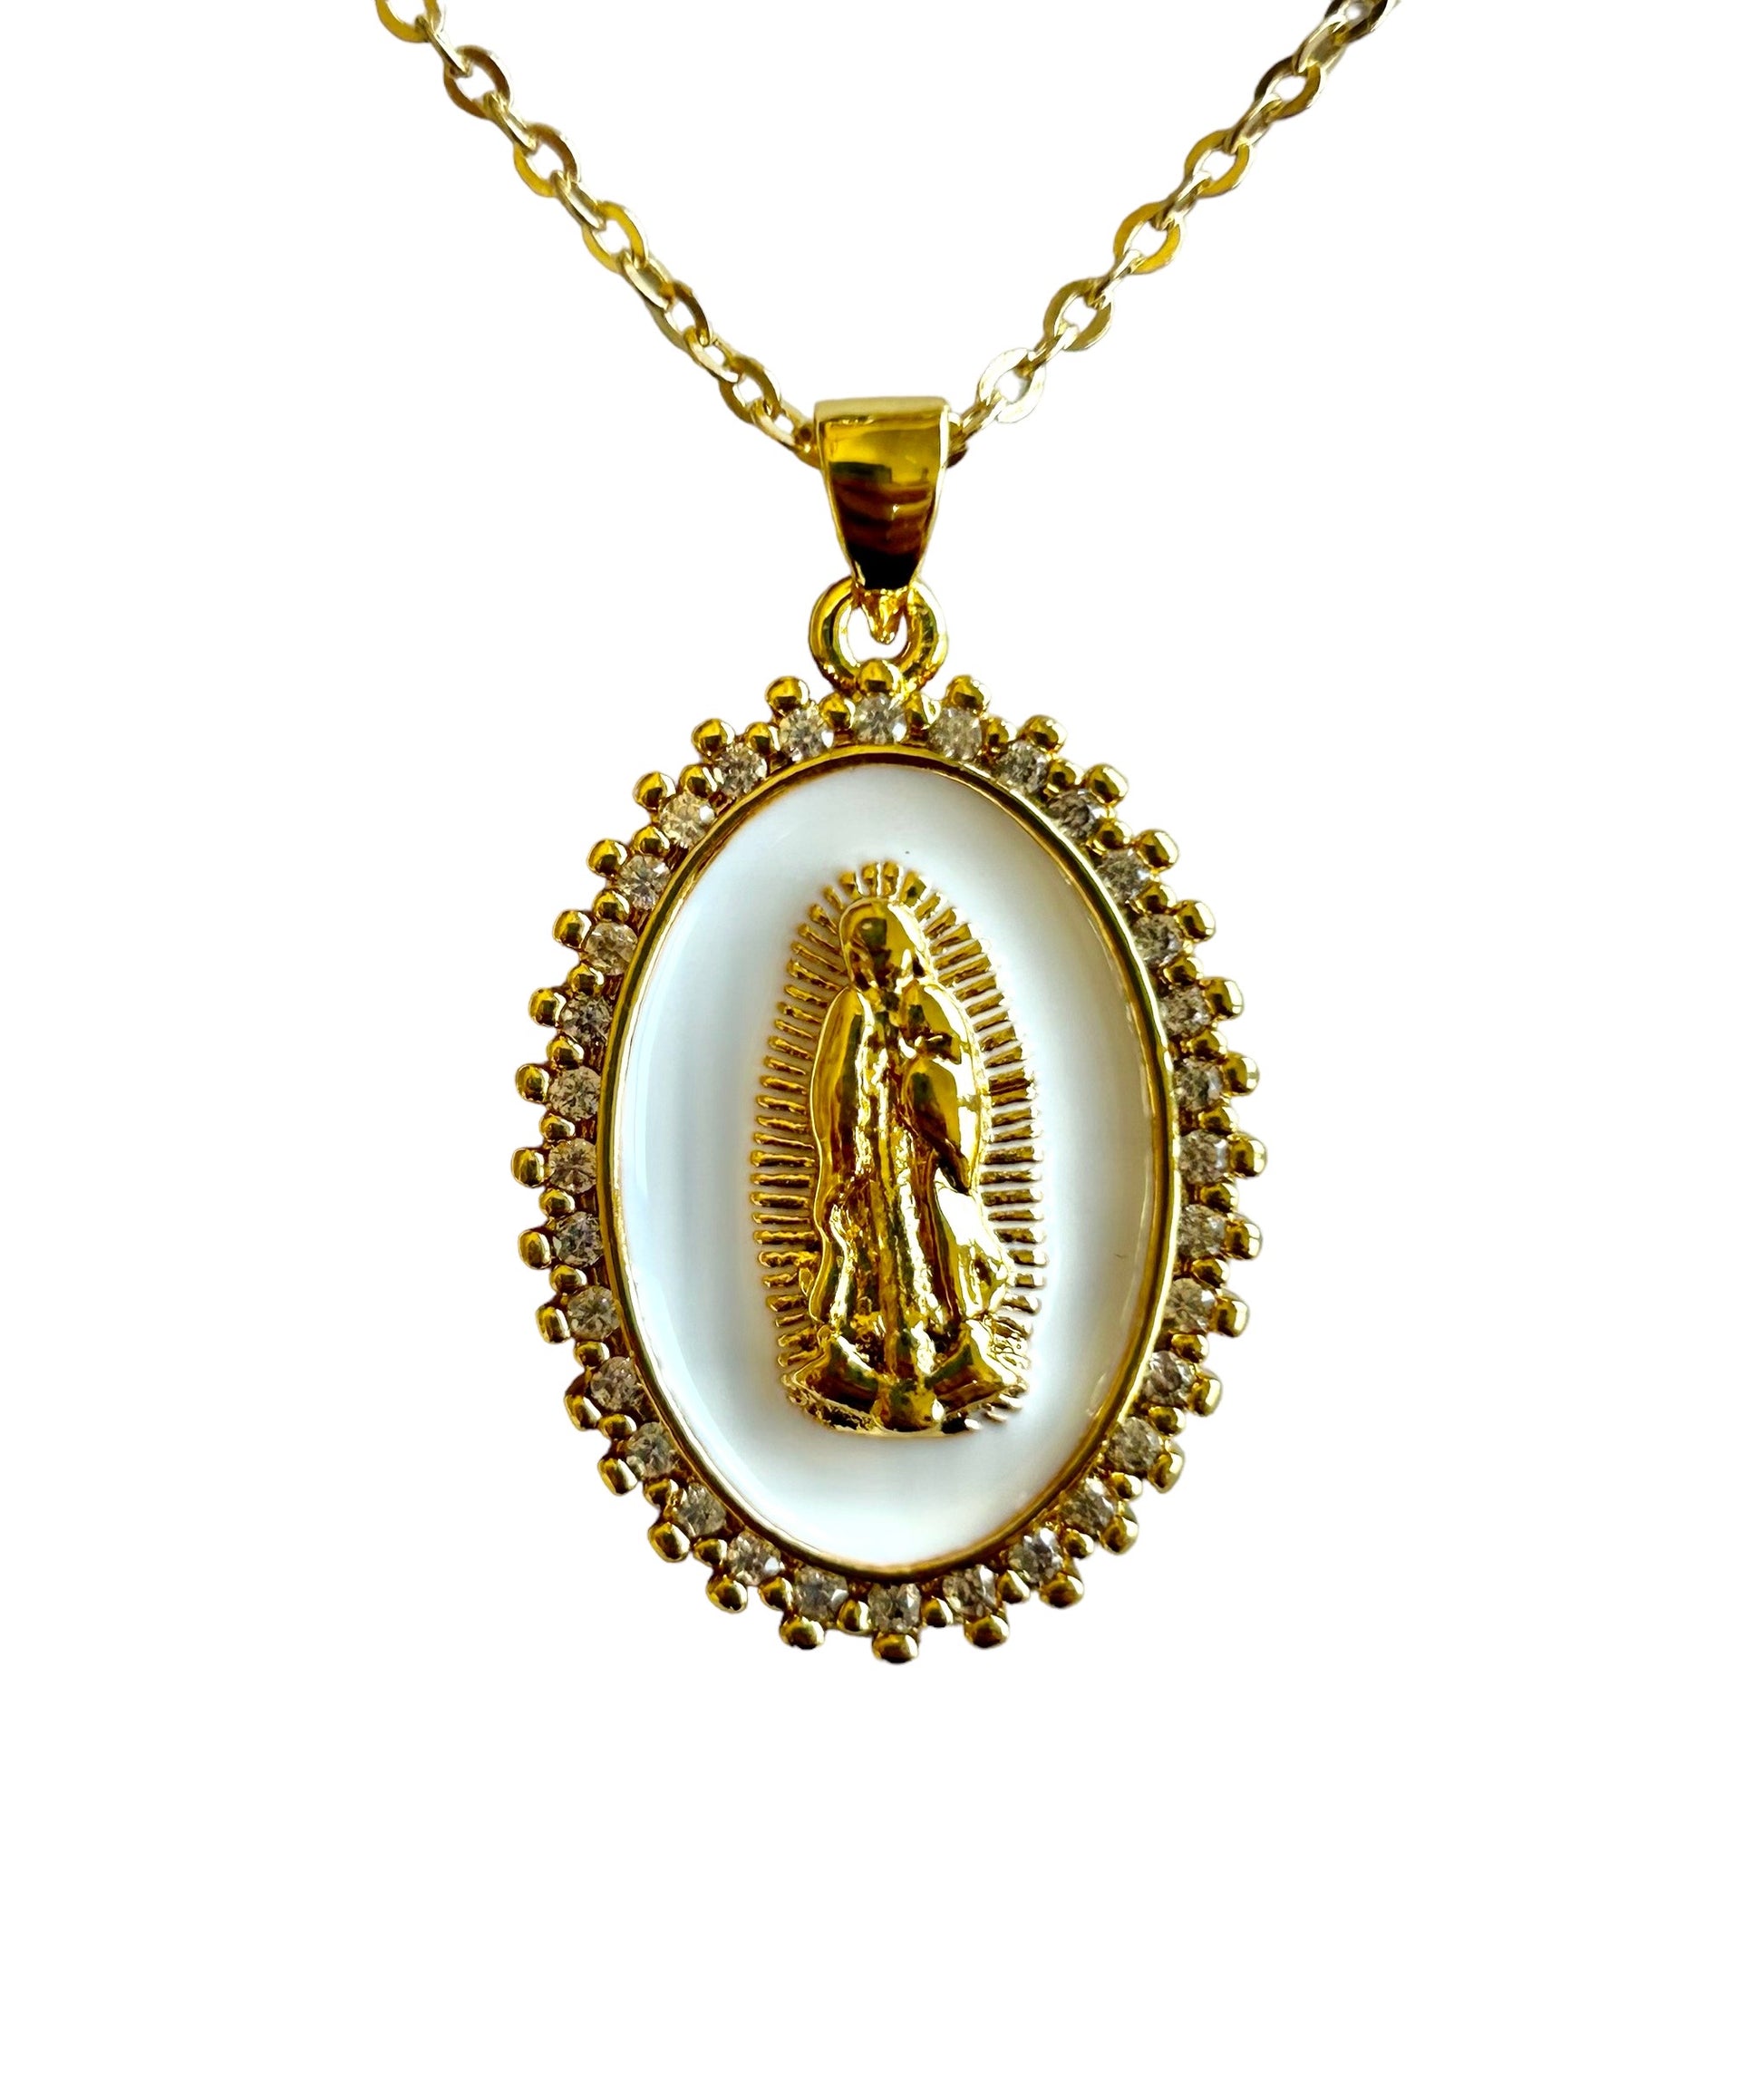 Virgin Mary Pendant Necklace mother of pearl background and delicate crystals surrounded in oval shape, catholic jewelry, catholic necklace, catholic gift, catholic gifts